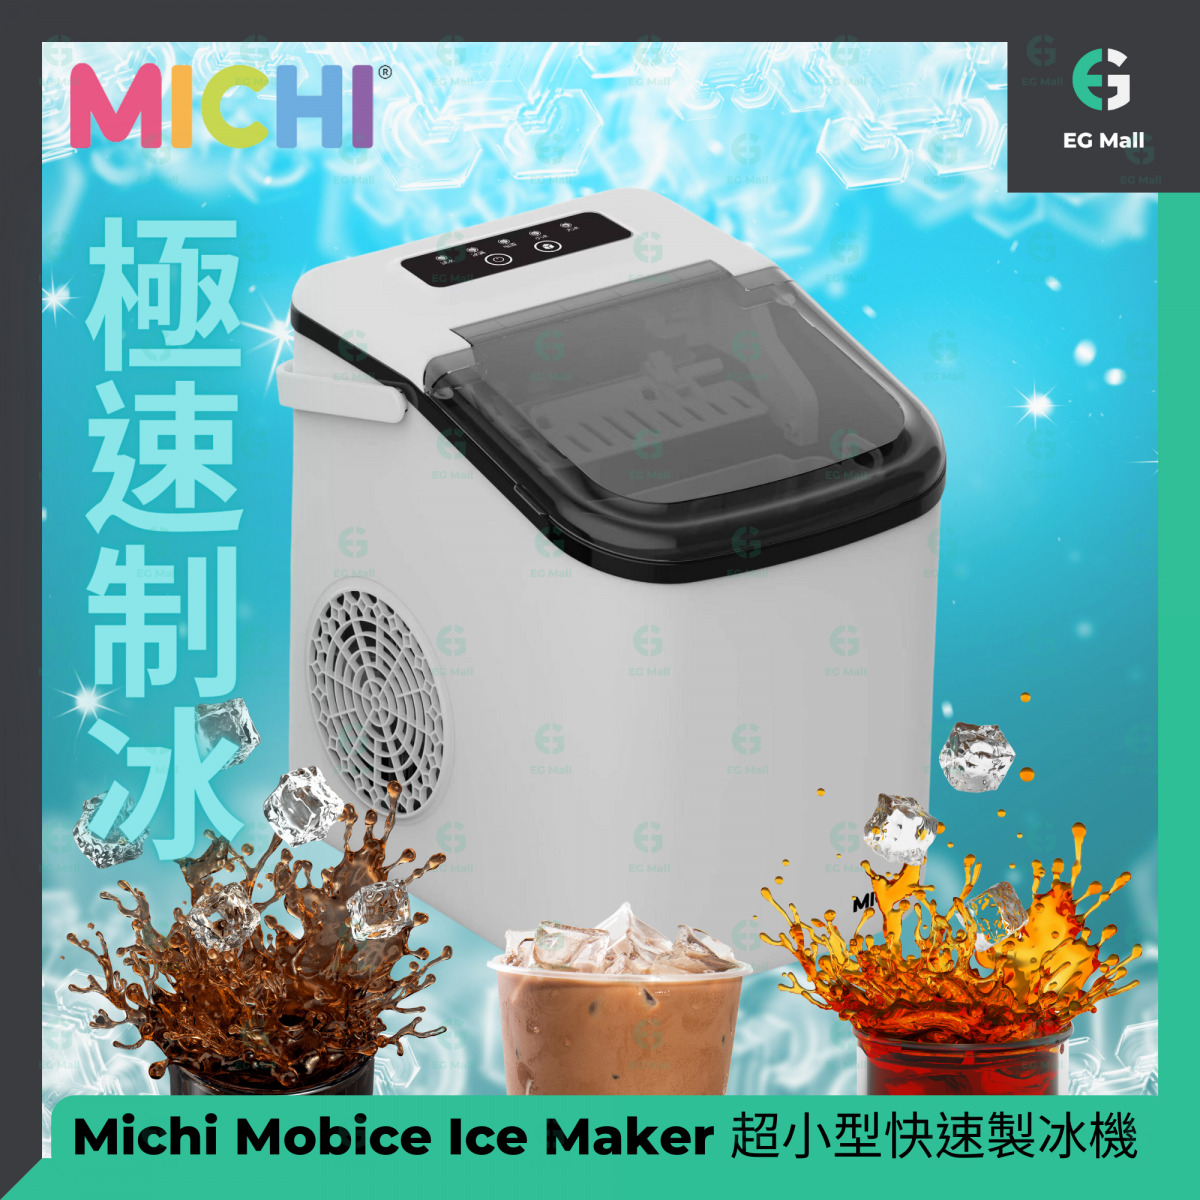 Mobice Ice Maker 快速製冰機 家用制冰機 子彈冰塊 6分鐘制冰 薄冰/厚冰可調節 1.1L 公升 環保 保溫層